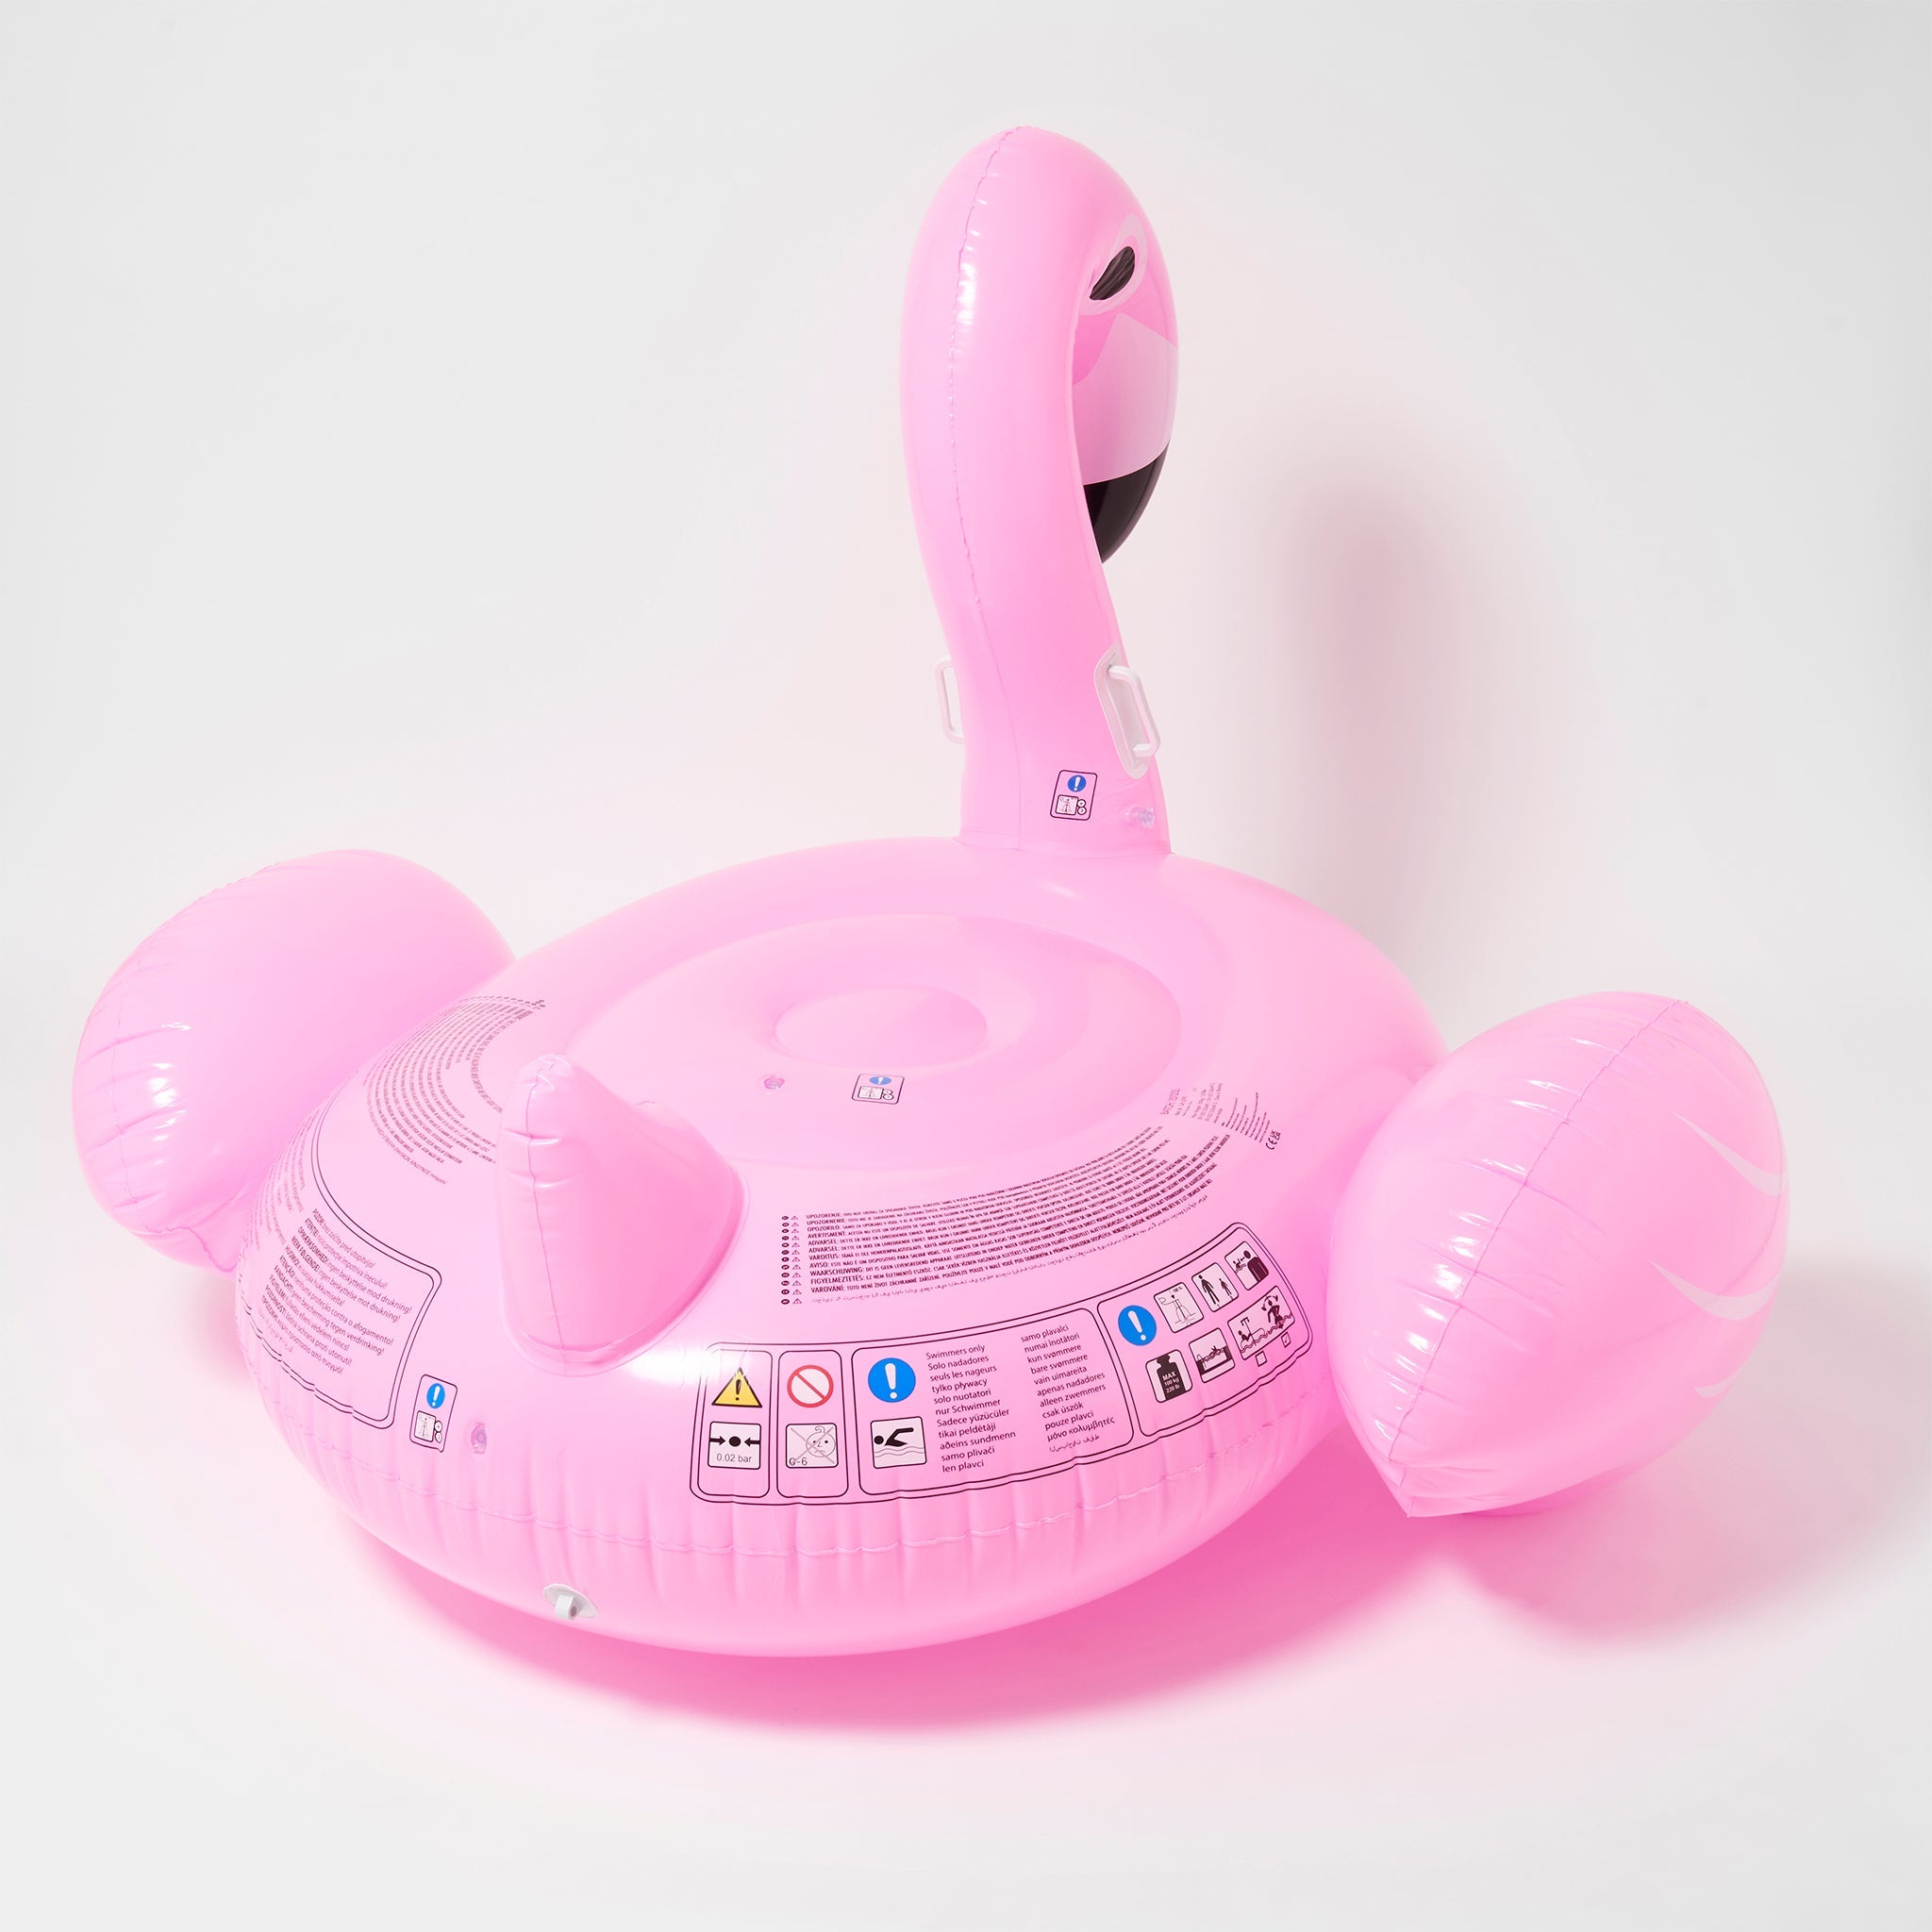 Luxe Ride-On Float | Rosie the Flamingo Bubblegum Pink